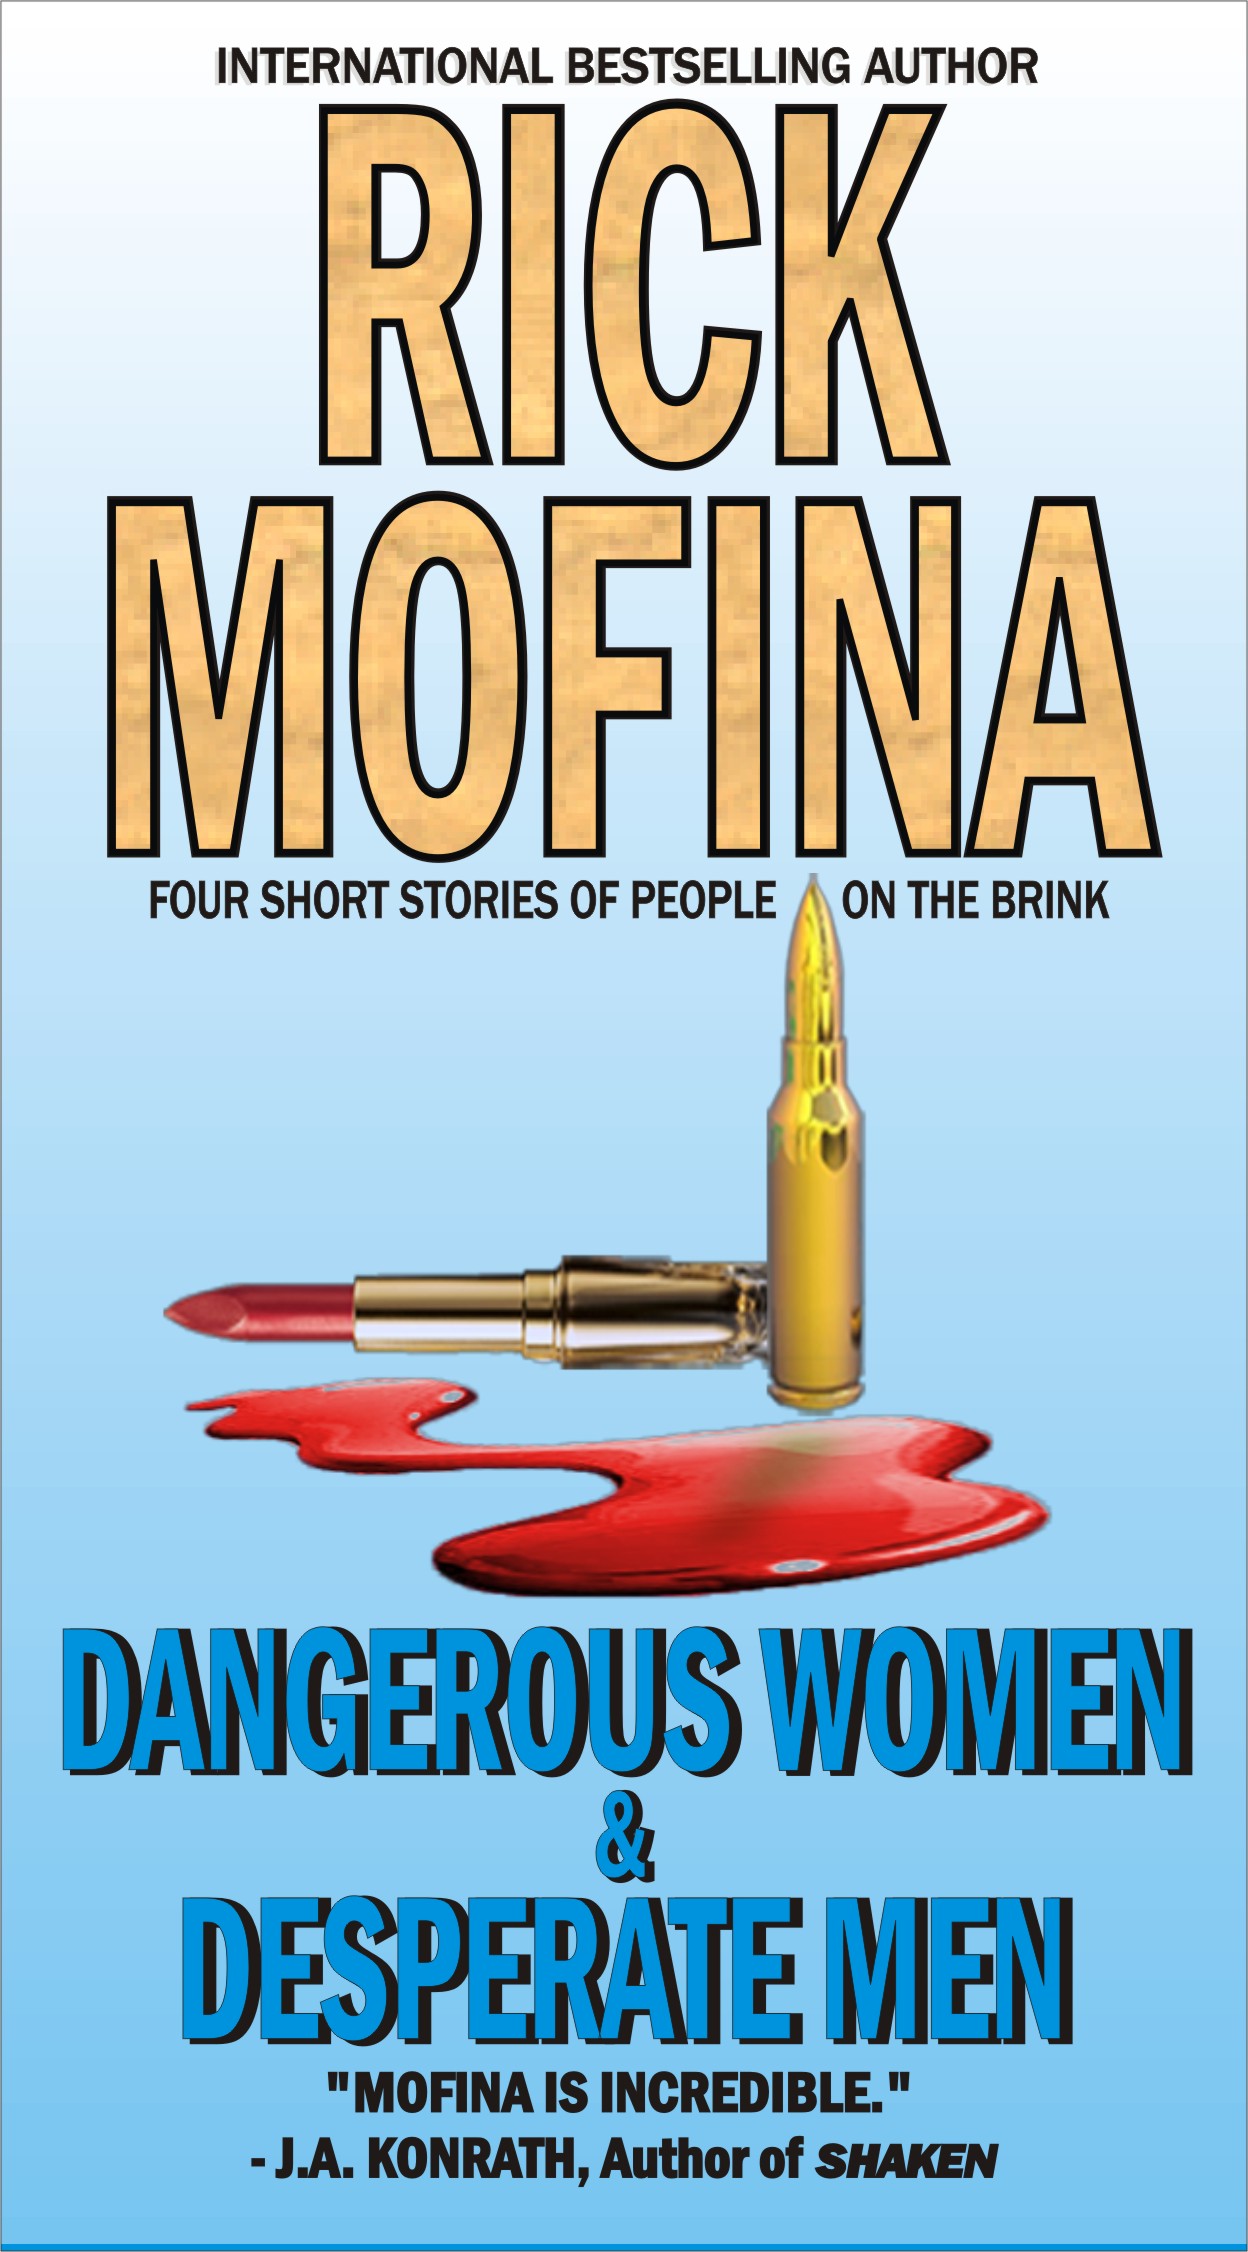  - Dangerous-Women-Desperate-Men-by-Rick-Mofina